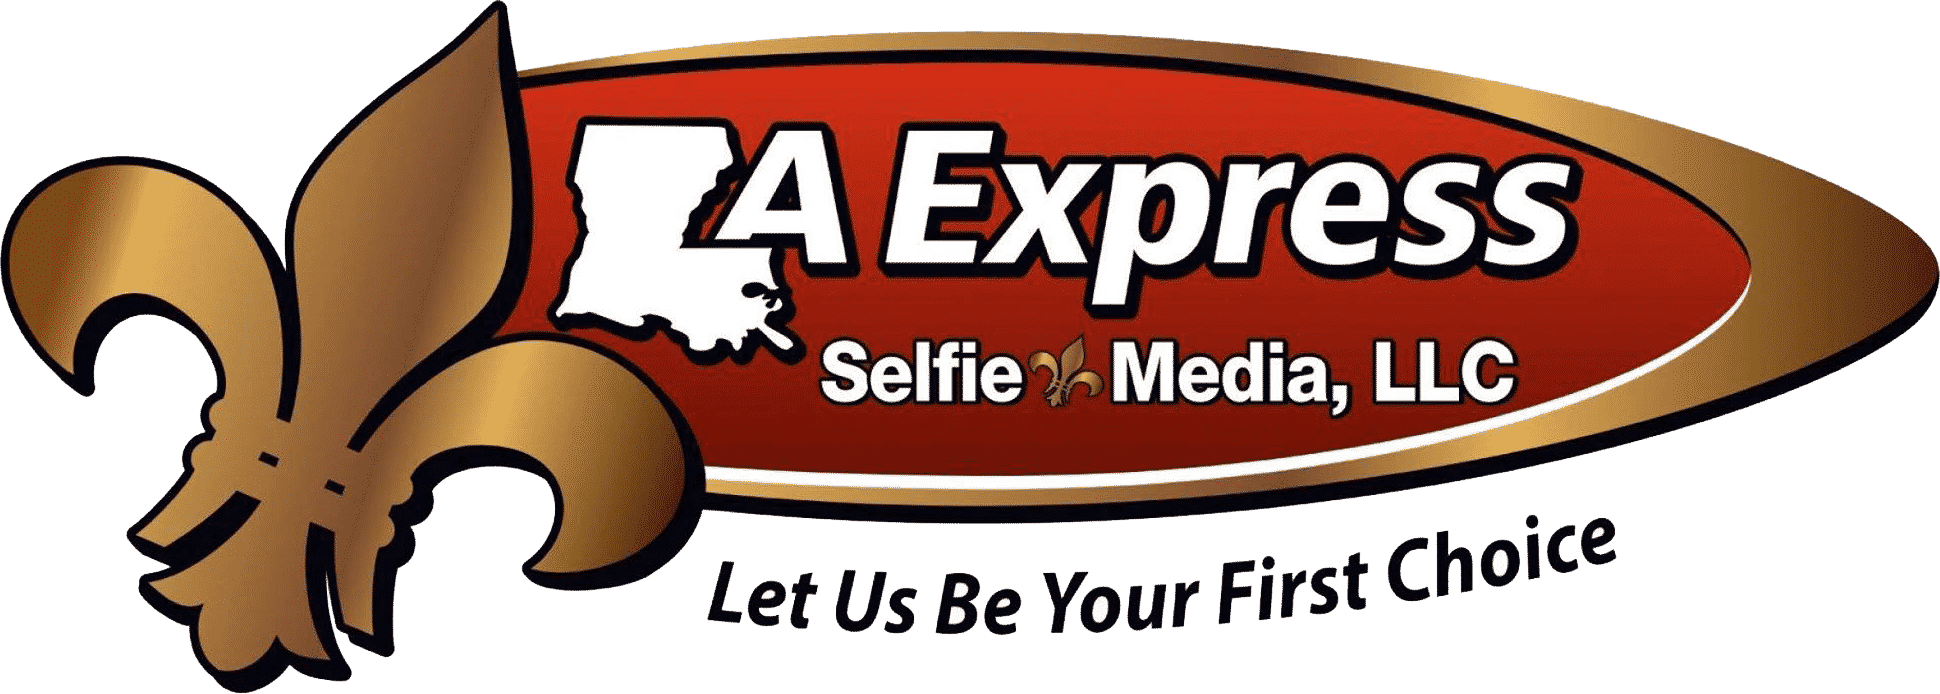 la express selfie media logo